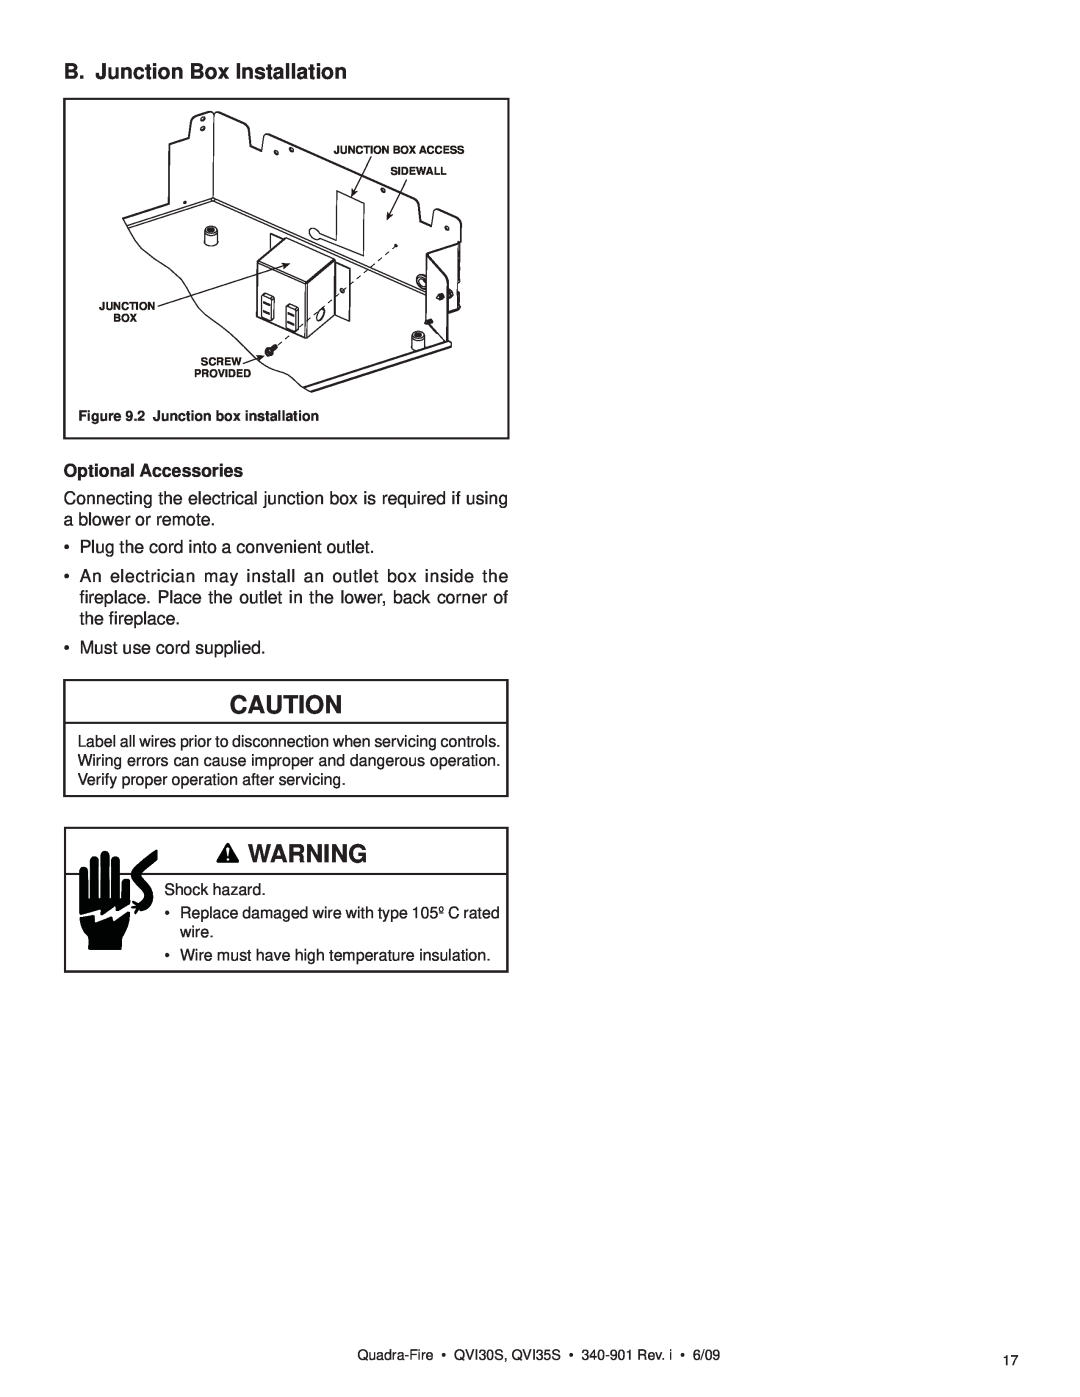 Quadra-Fire QVI30S, QVI35S owner manual B. Junction Box Installation, Optional Accessories 